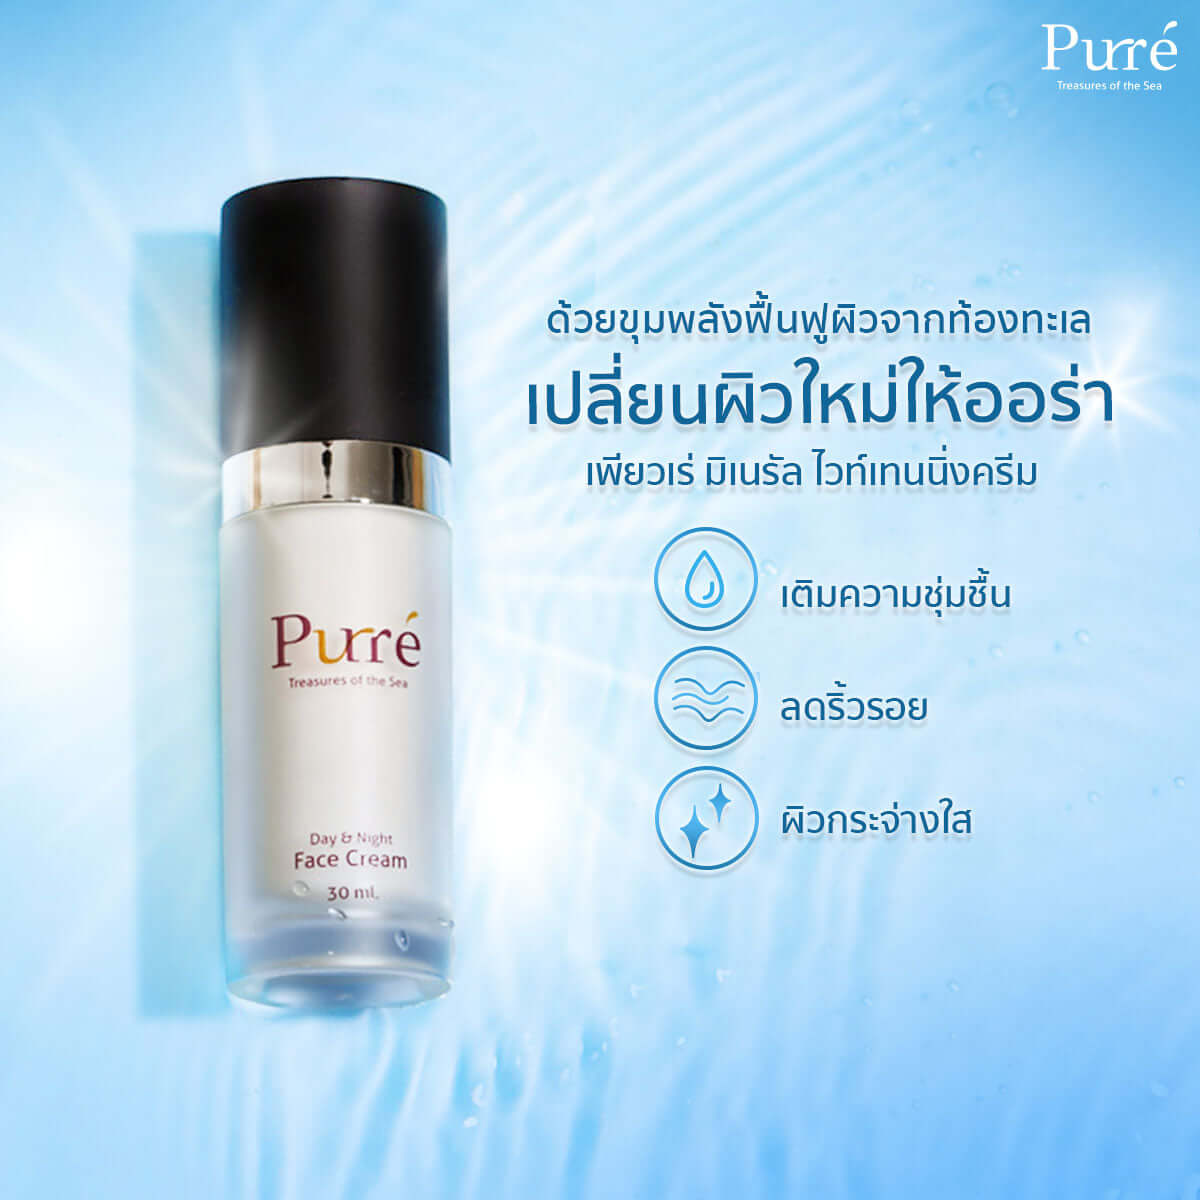 Puré Mineral Whitening Cream